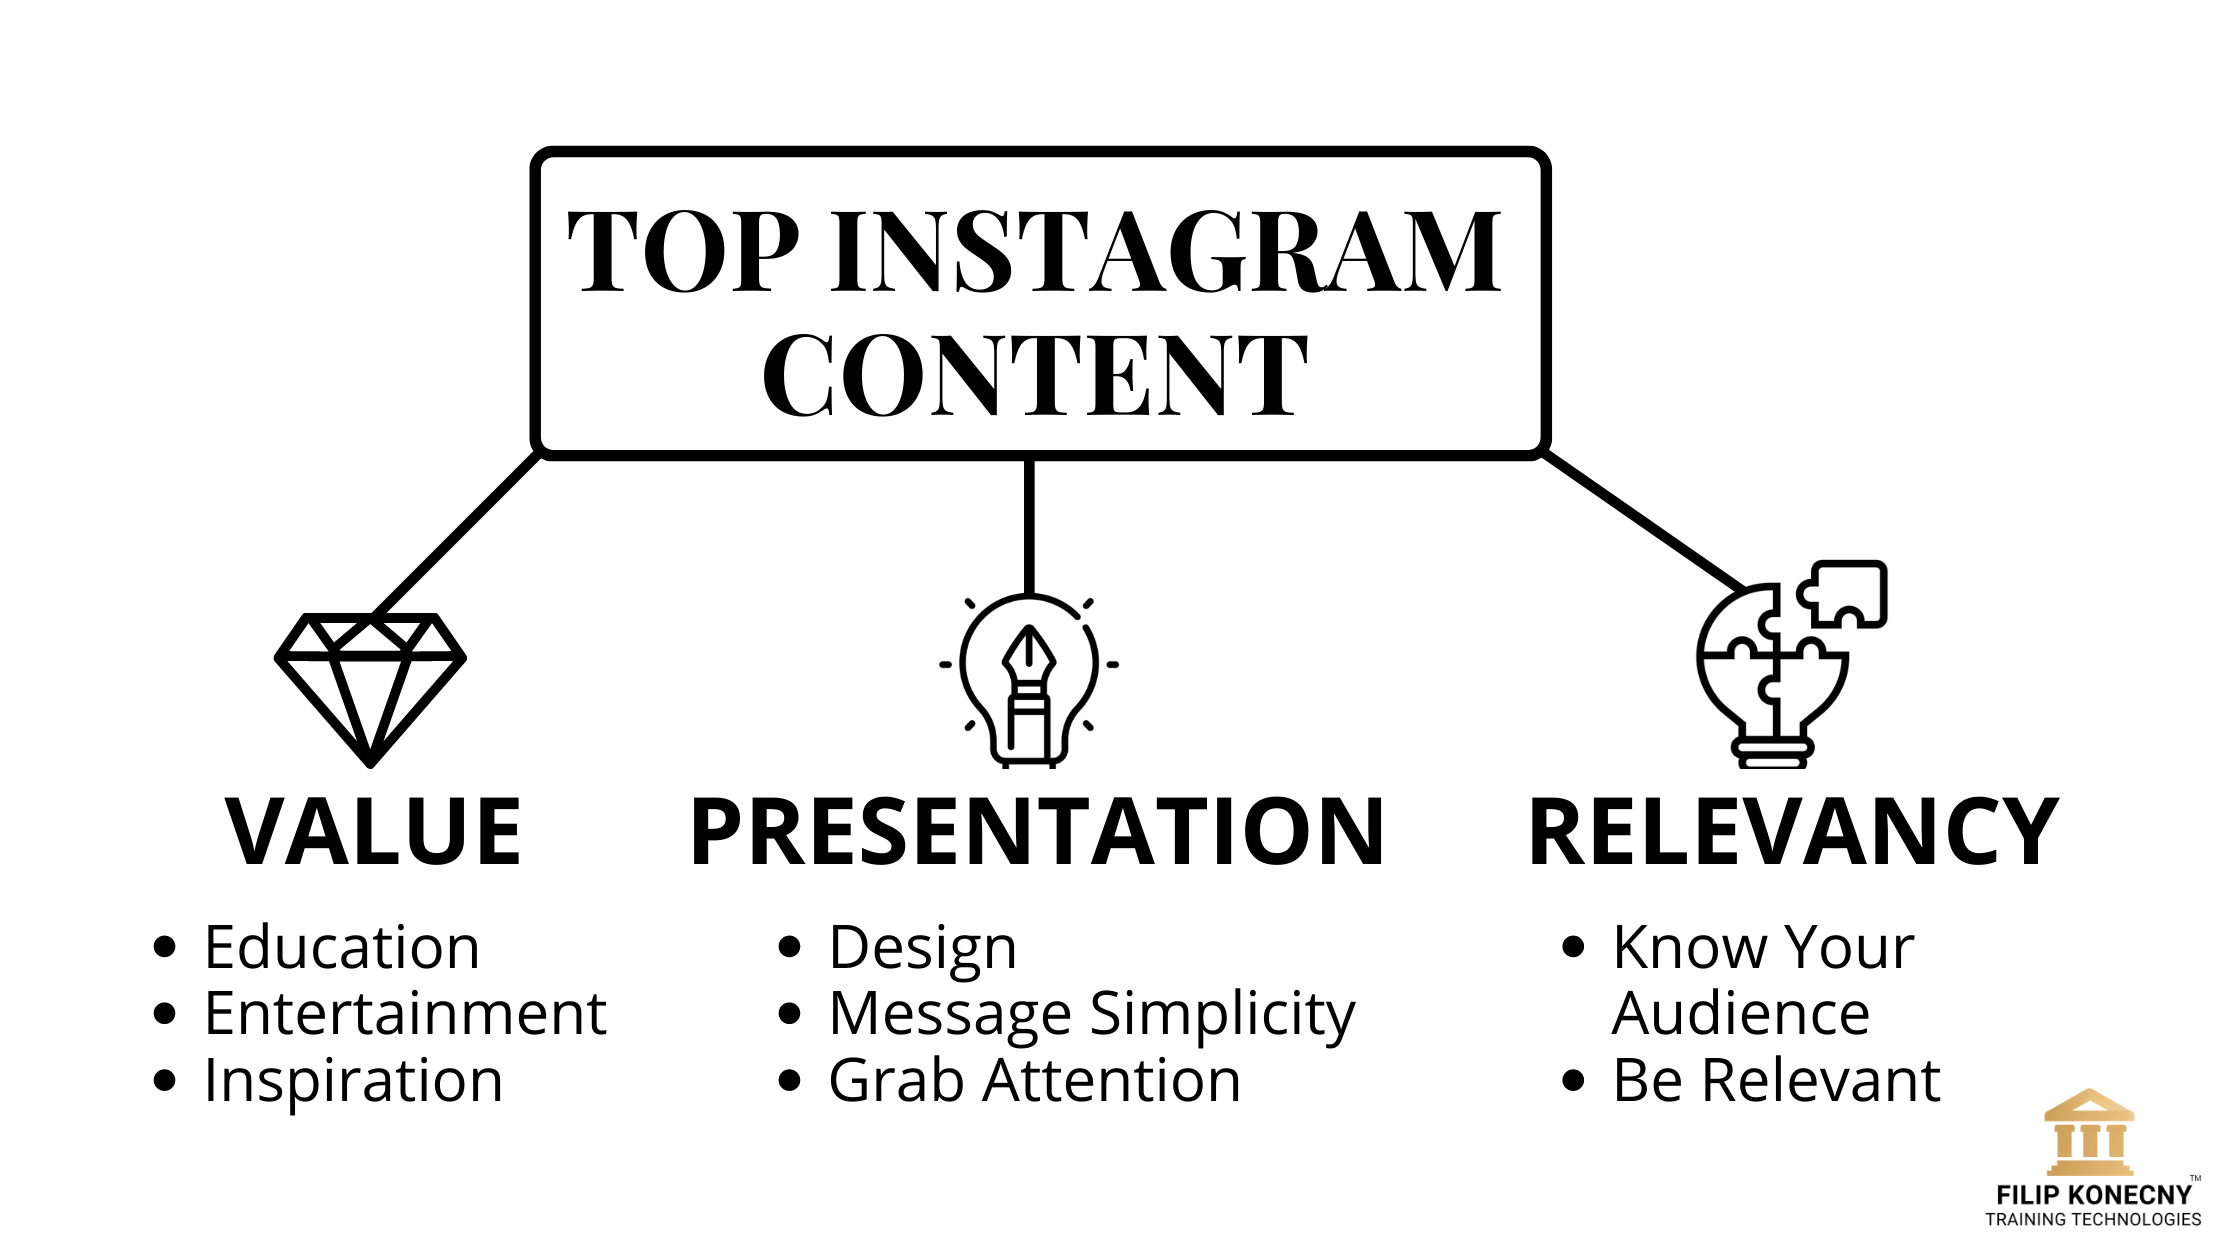 Pillars of Instagram content creation infographic